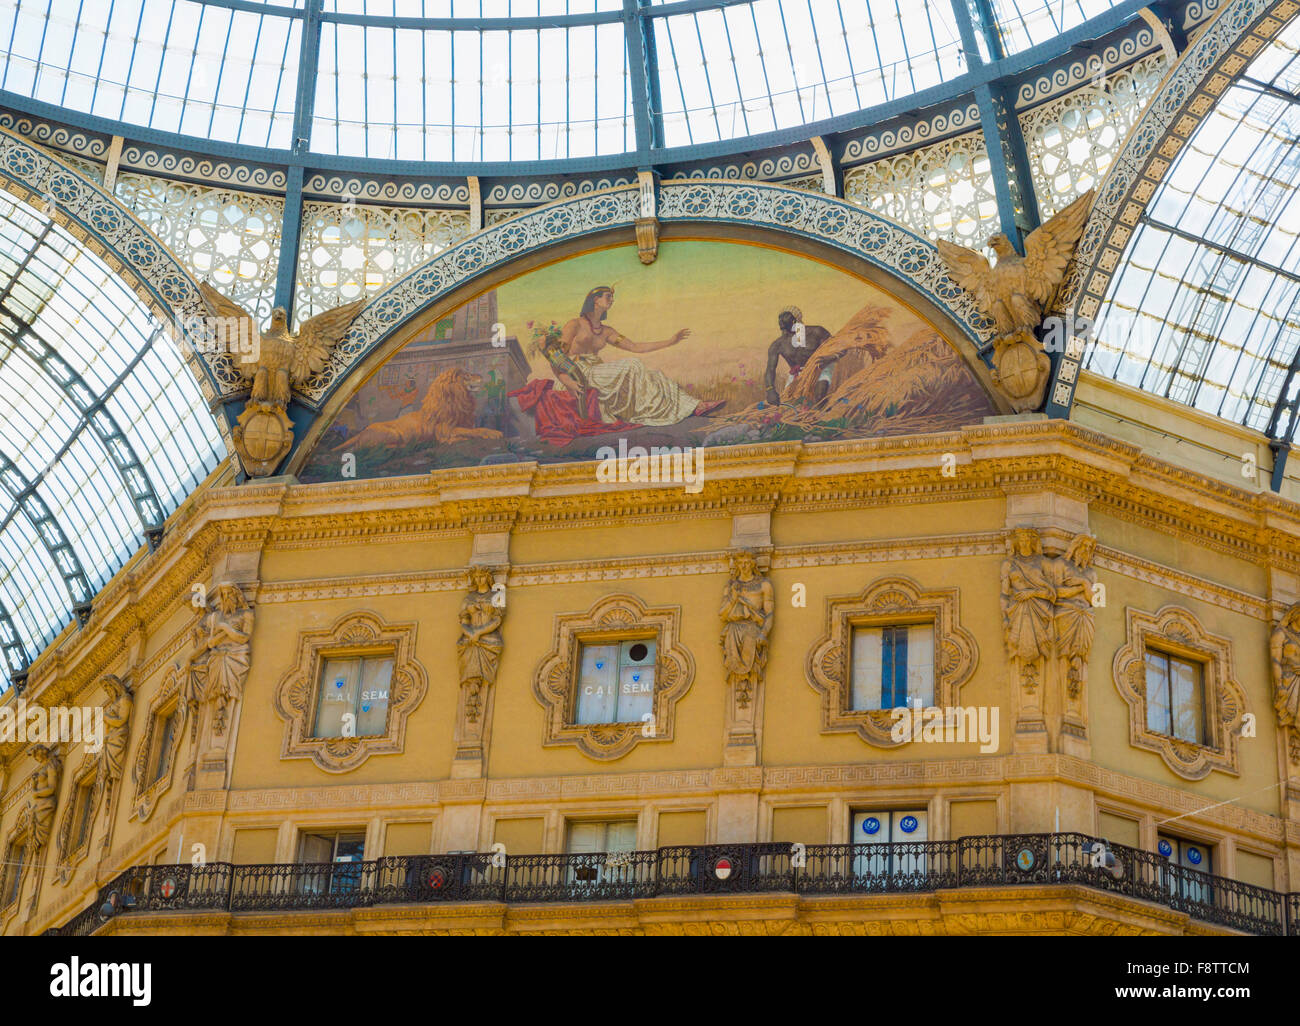 Milan, Milan Province, Lombardy, Italy.  Galleria Vittorio Emanuele II shopping arcade. Allegorical fresco representing Africa. Stock Photo